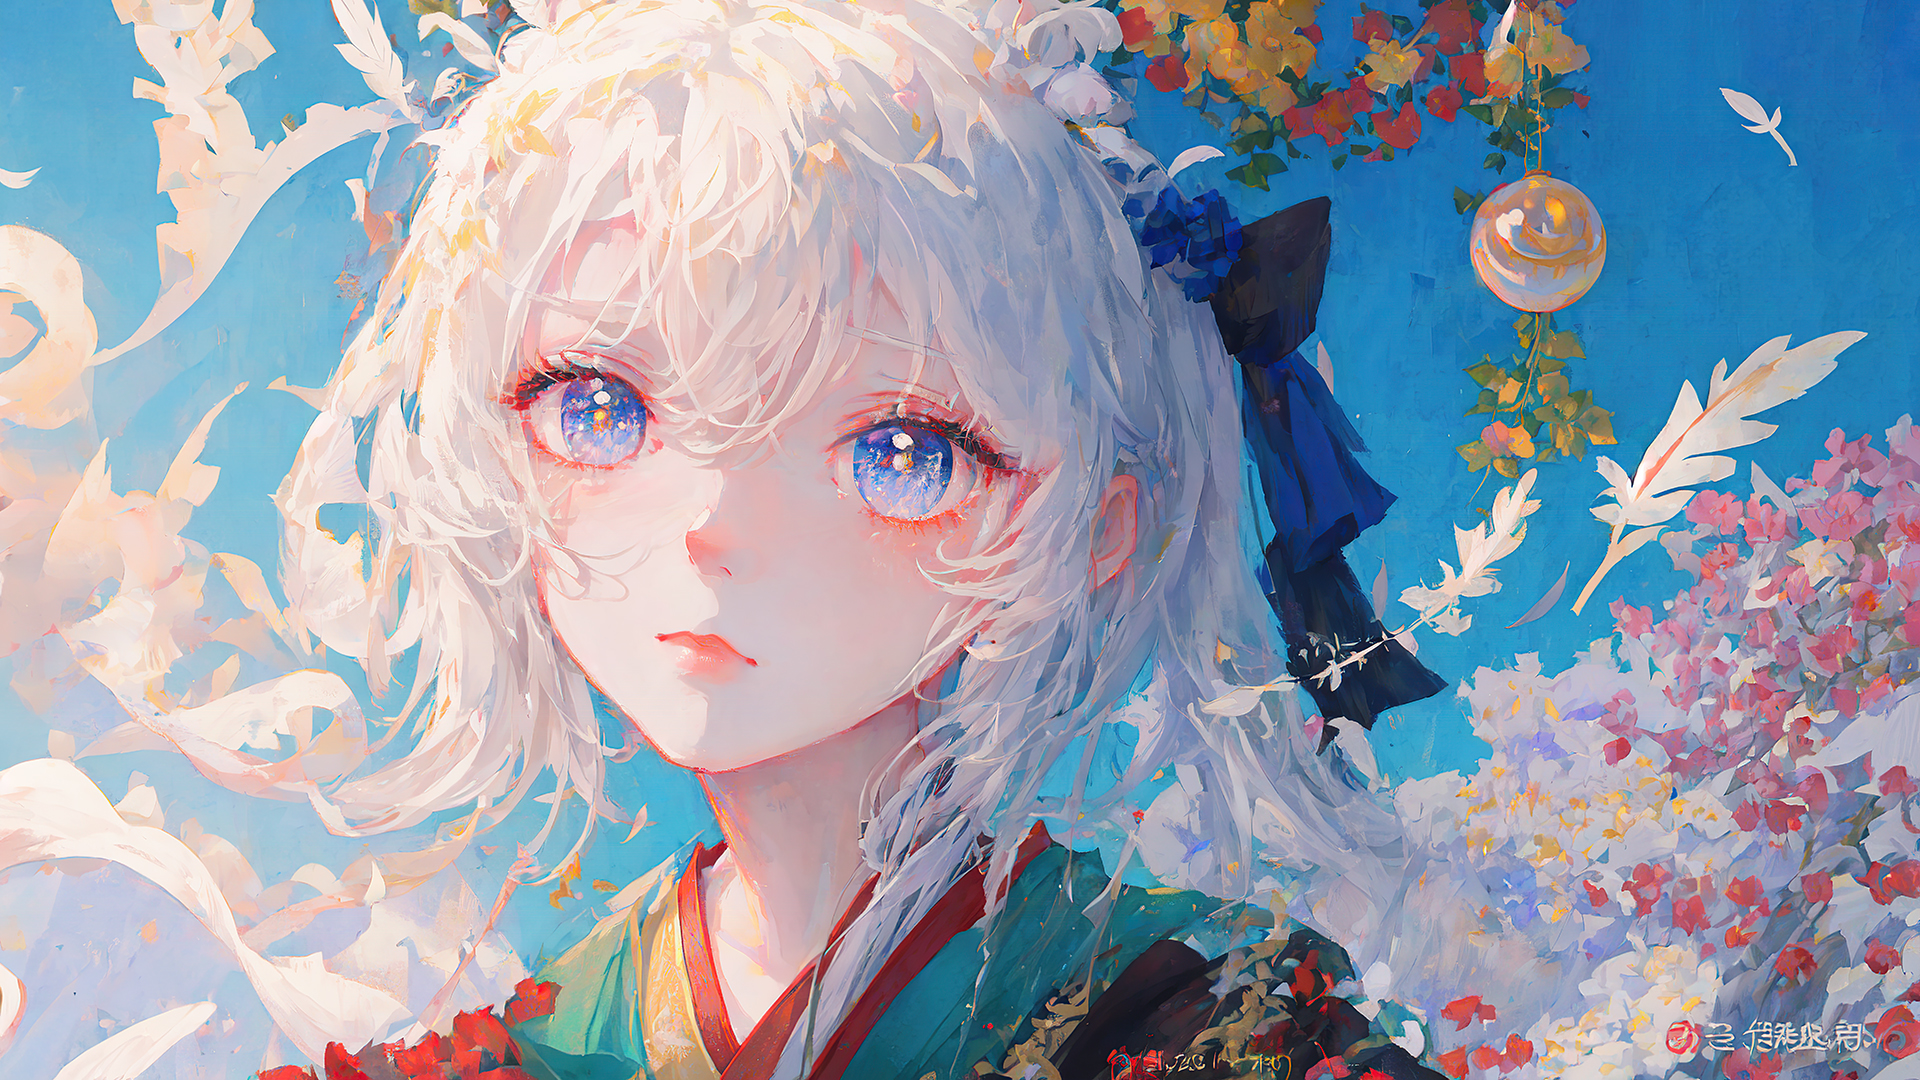 AI Image Generator: Anime angel, painter by Arina Tanemura